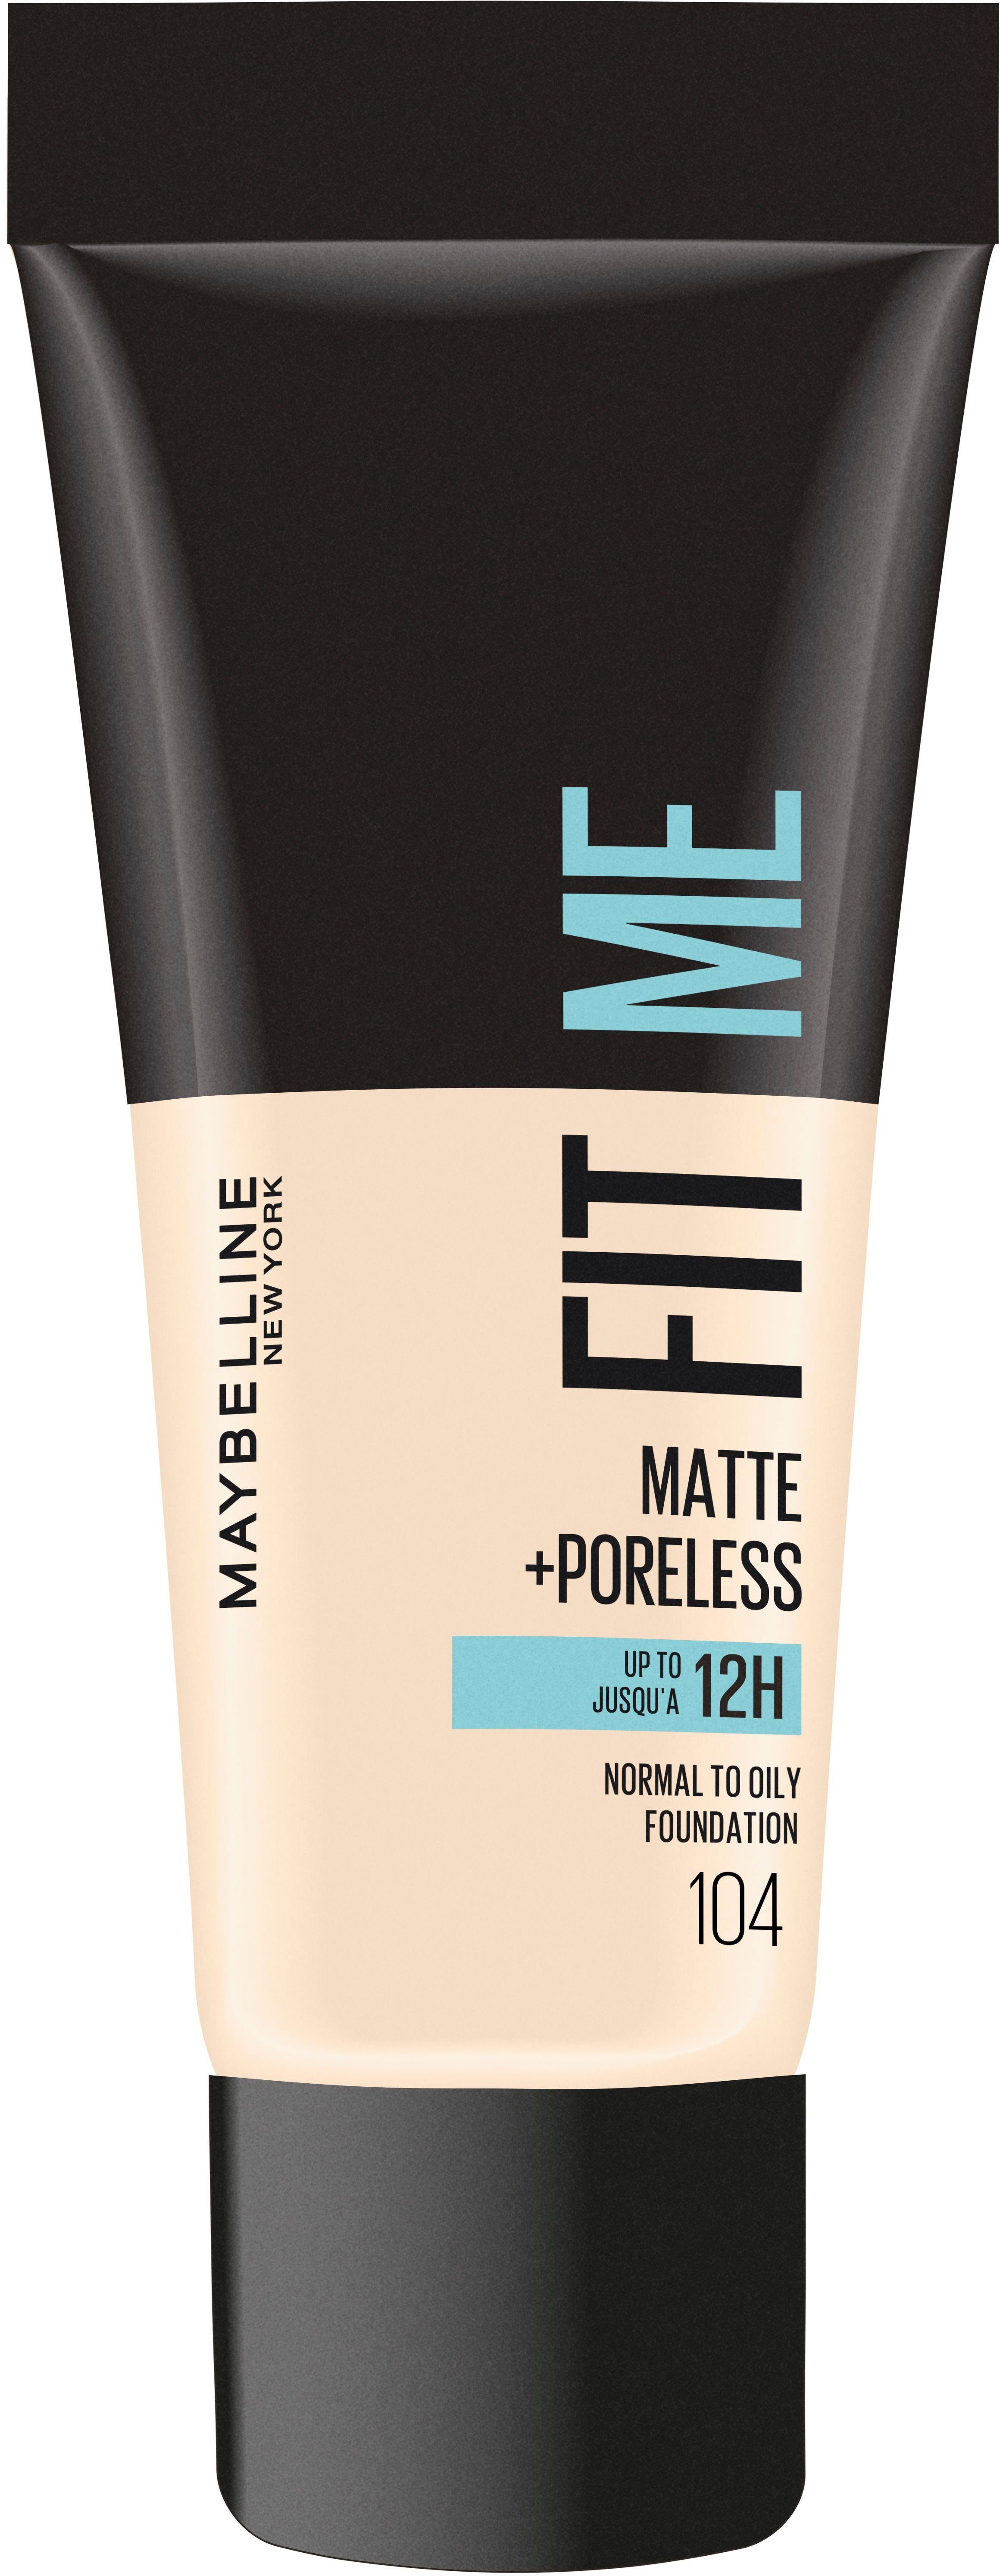 NEW New Me! Matte Make-Up Foundation York Fit YORK Poreless MAYBELLINE Maybelline +